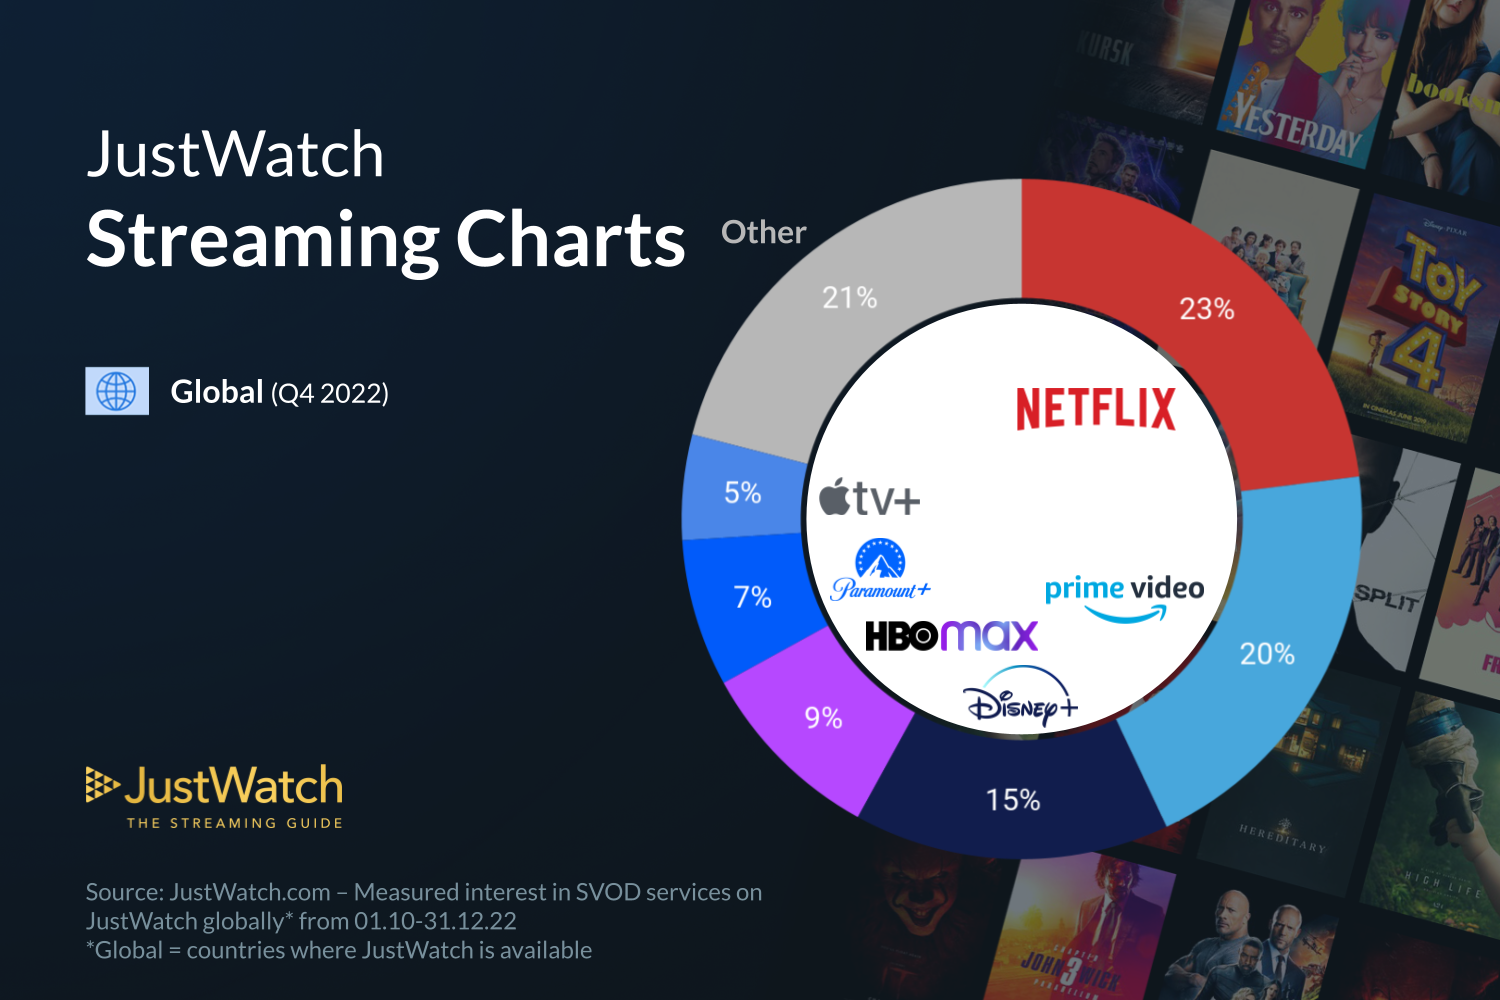 Apple TV+ global market share shrinks and platform is overtaken by Paramount+